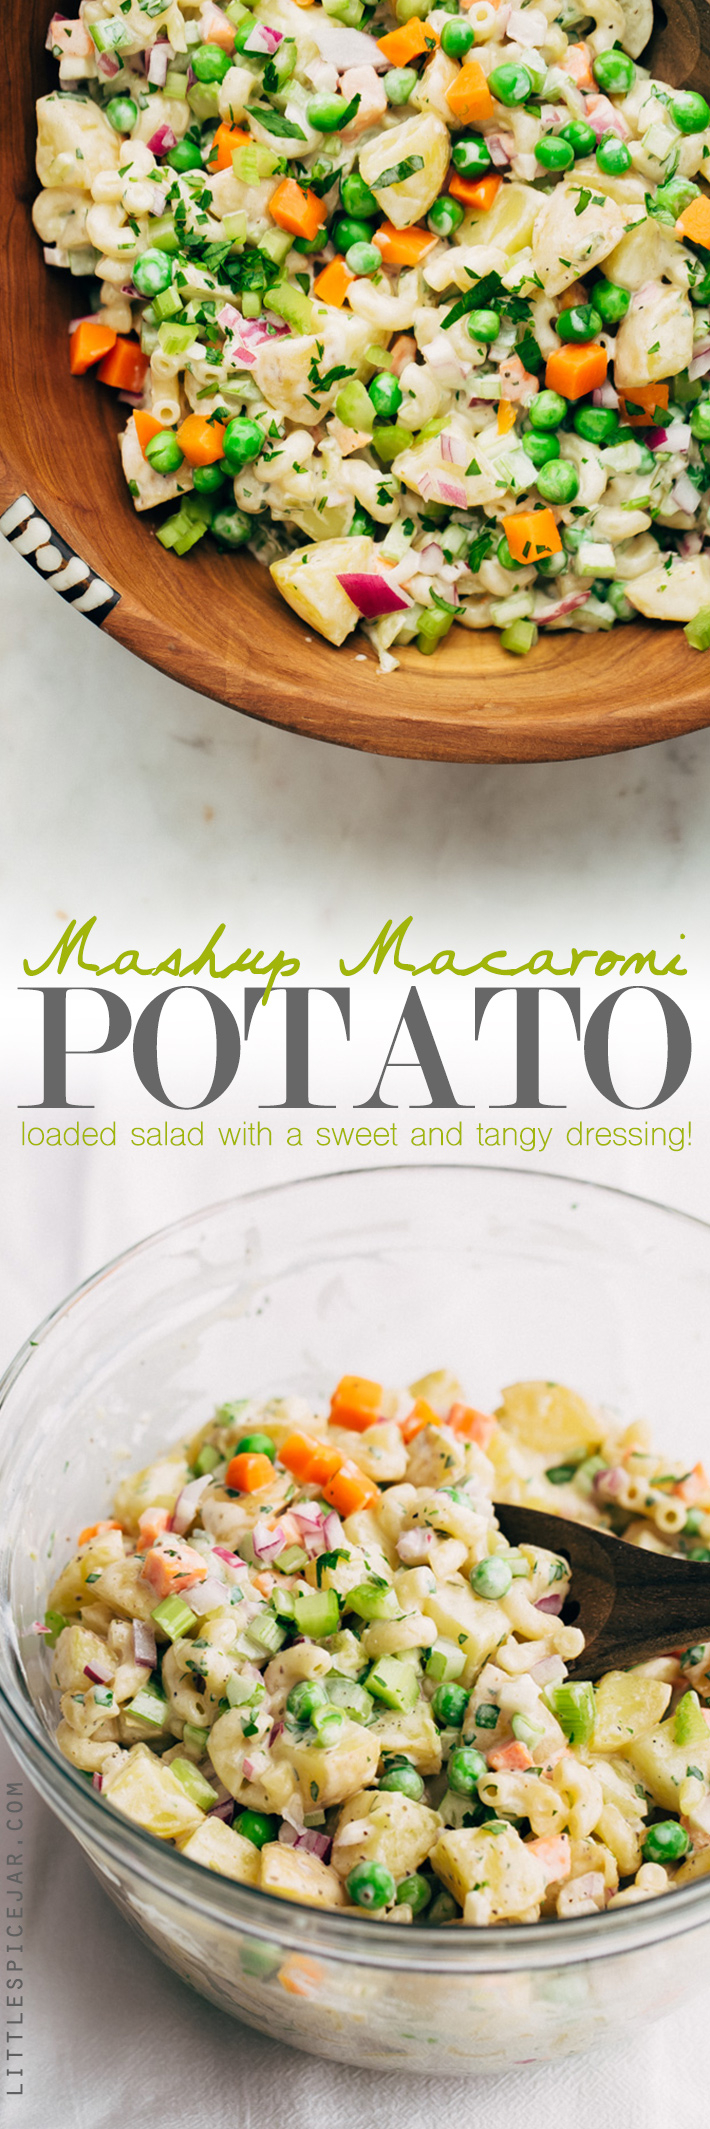 Mashup Macaroni Potato Salad - my family's favorite potato salad recipe! This is easy to make and is LOADED with flavor! #potatosalad #salad #macaronisalad #picnic #barbecue | Littlespicejar.com